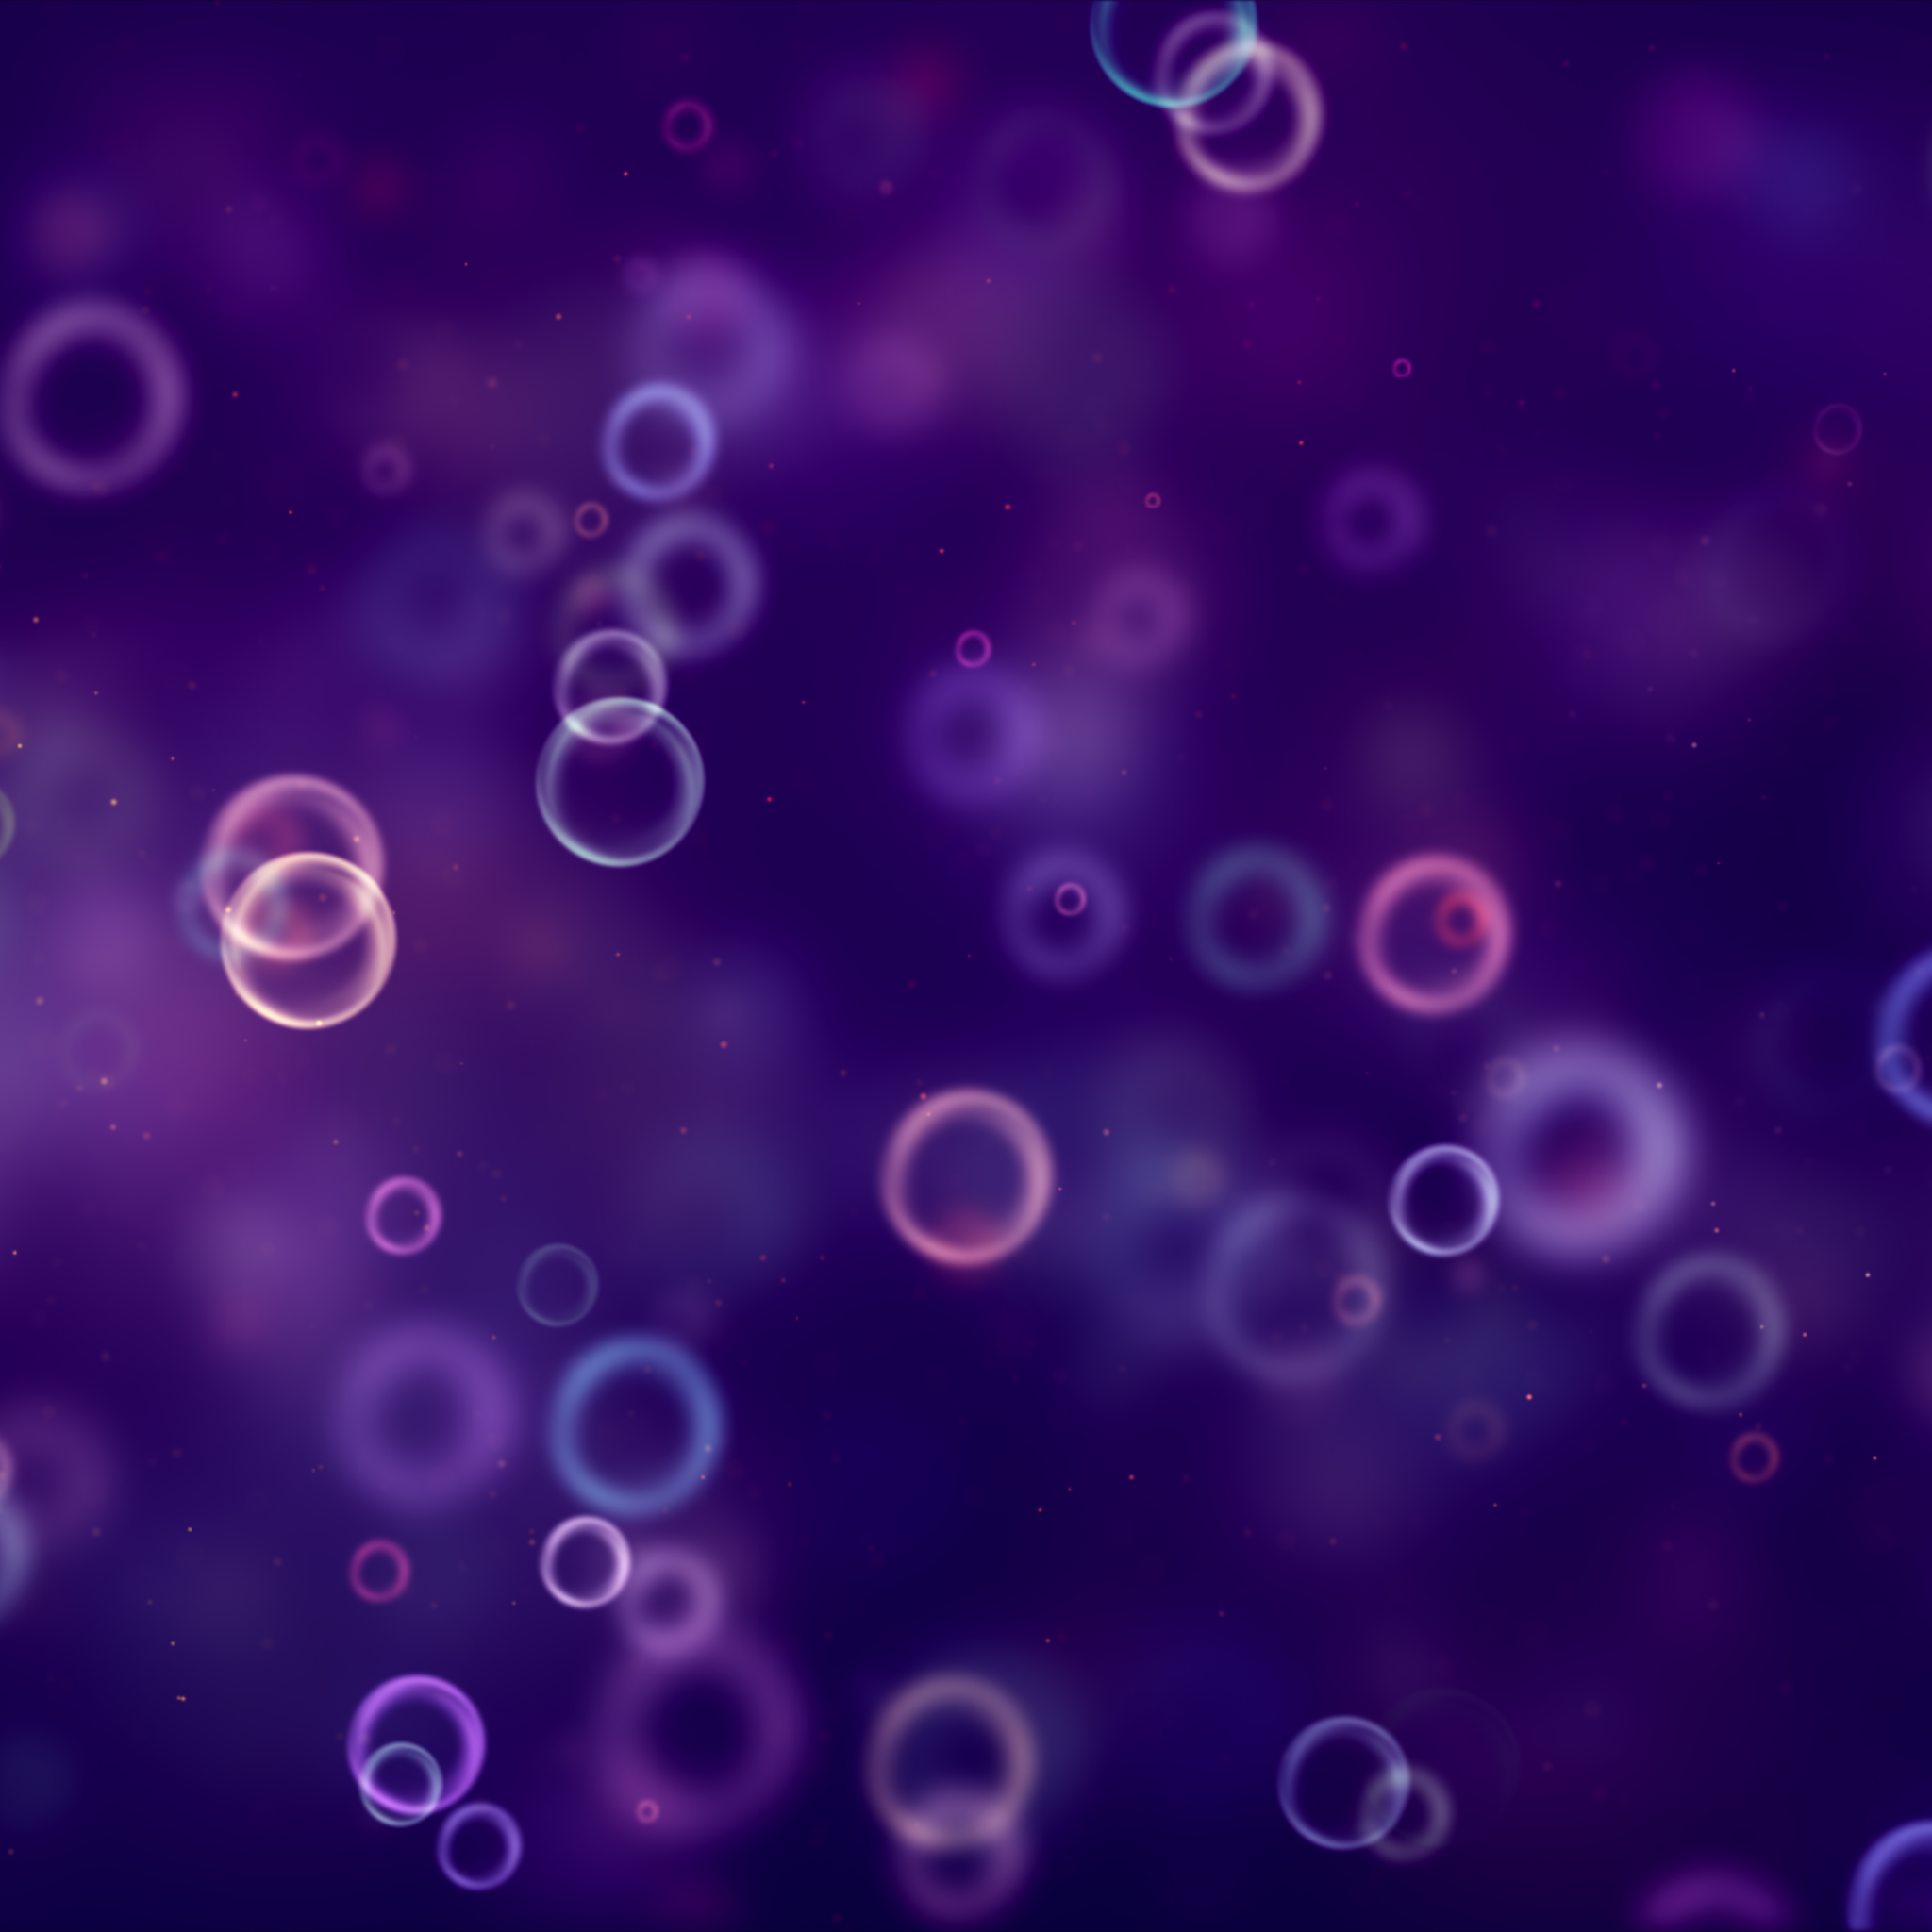 Free Bubble Wallpapers Download  PixelsTalkNet